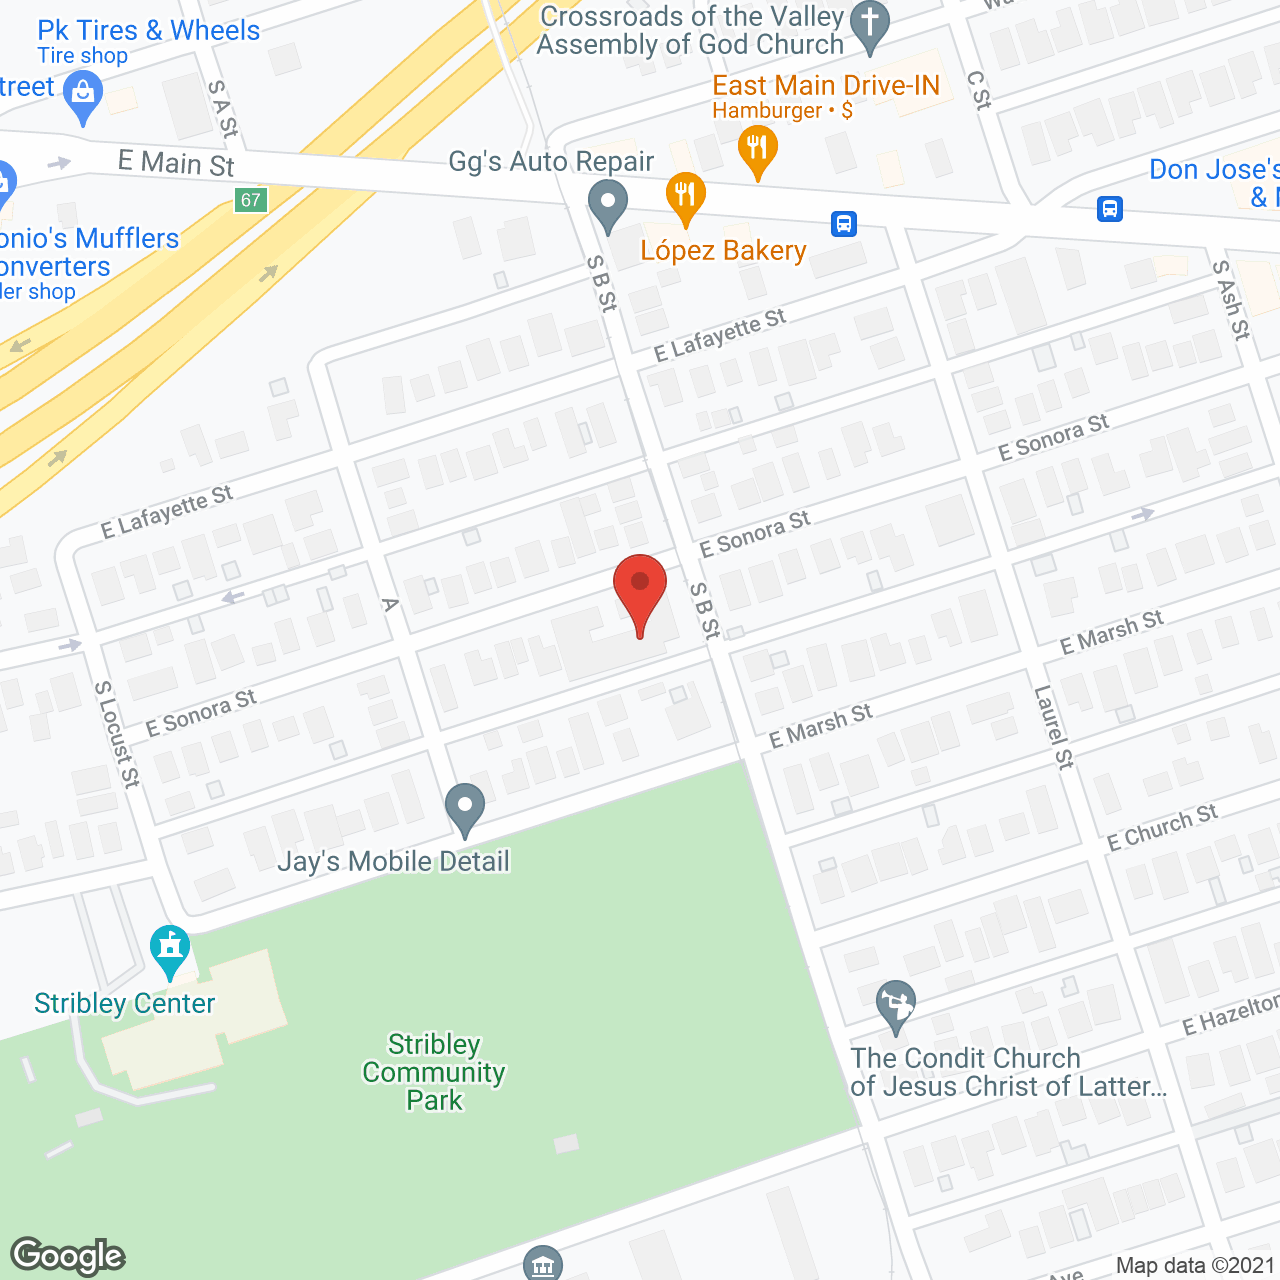 Casa Del Sol in google map